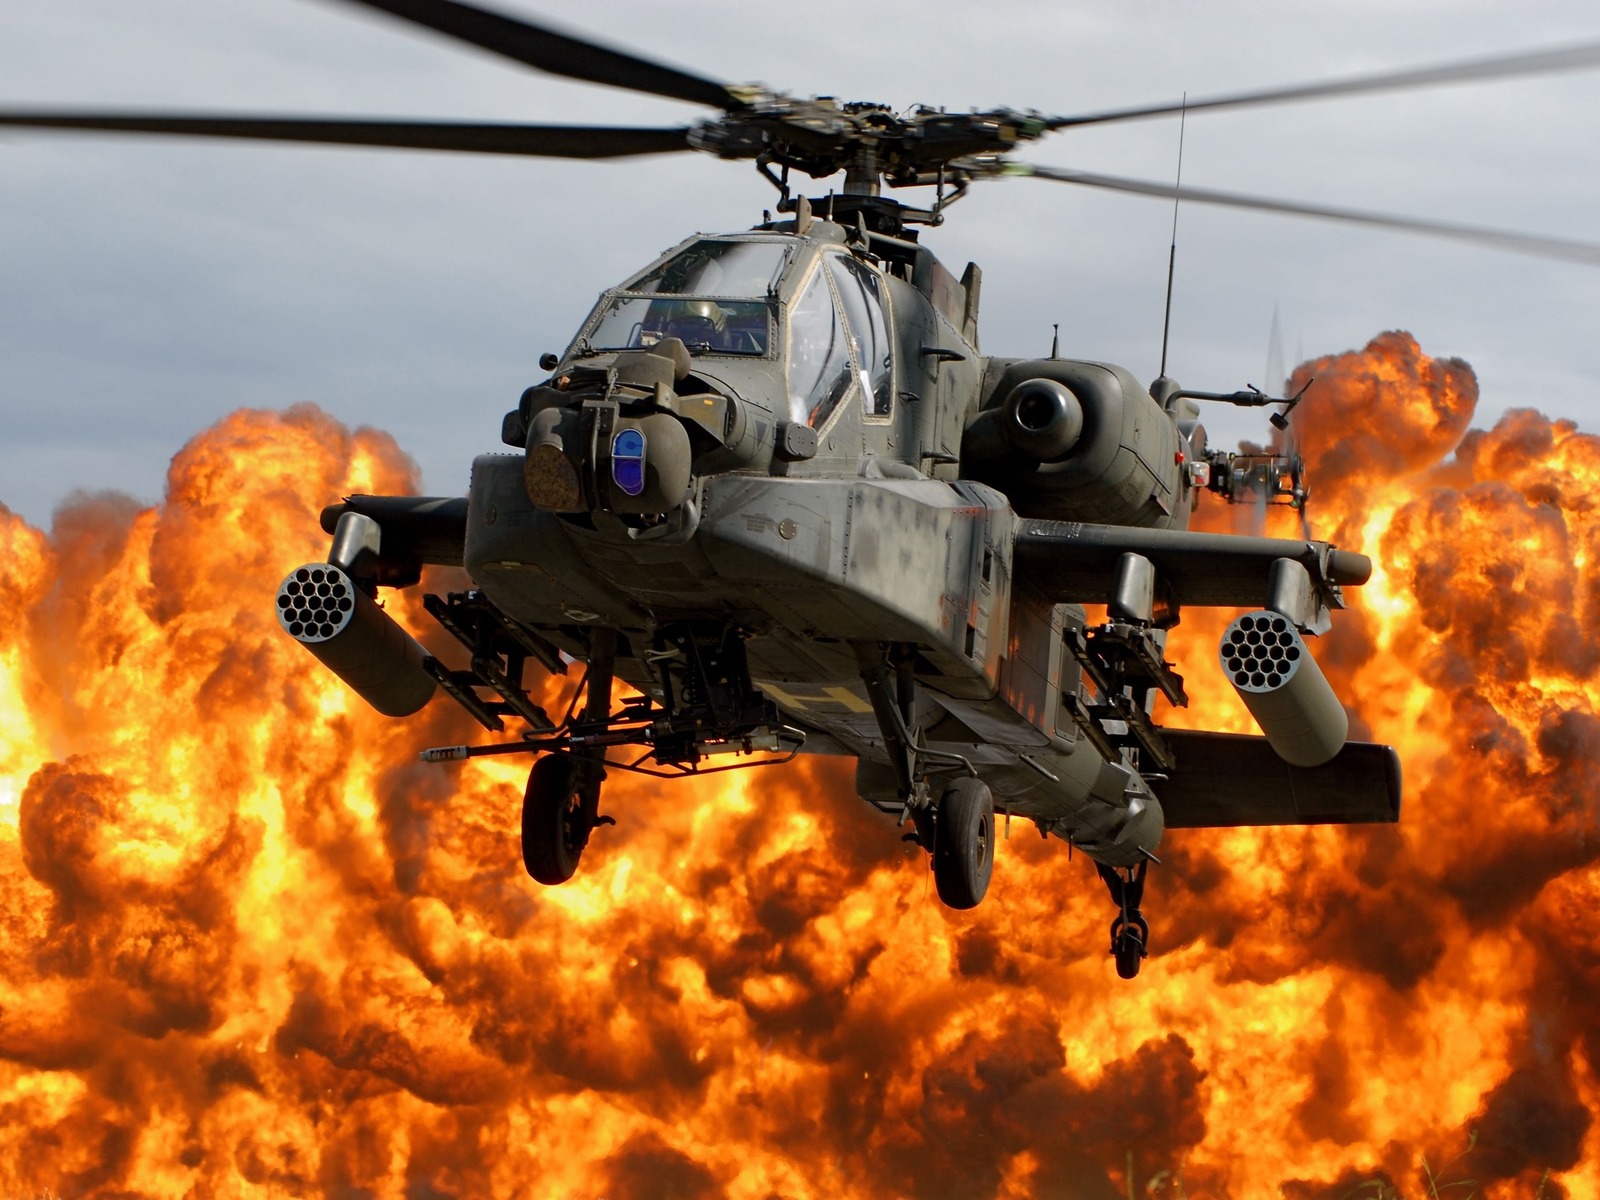 http://4.bp.blogspot.com/--MOqpzyrjL8/TkbGE9Y7OZI/AAAAAAAAA3Q/HoEK-OadekI/s1600/ah-64d-apache-wallpaper-helicopter-blade-cab-explosion-fire-napalm-127634-1600x1200.jpg